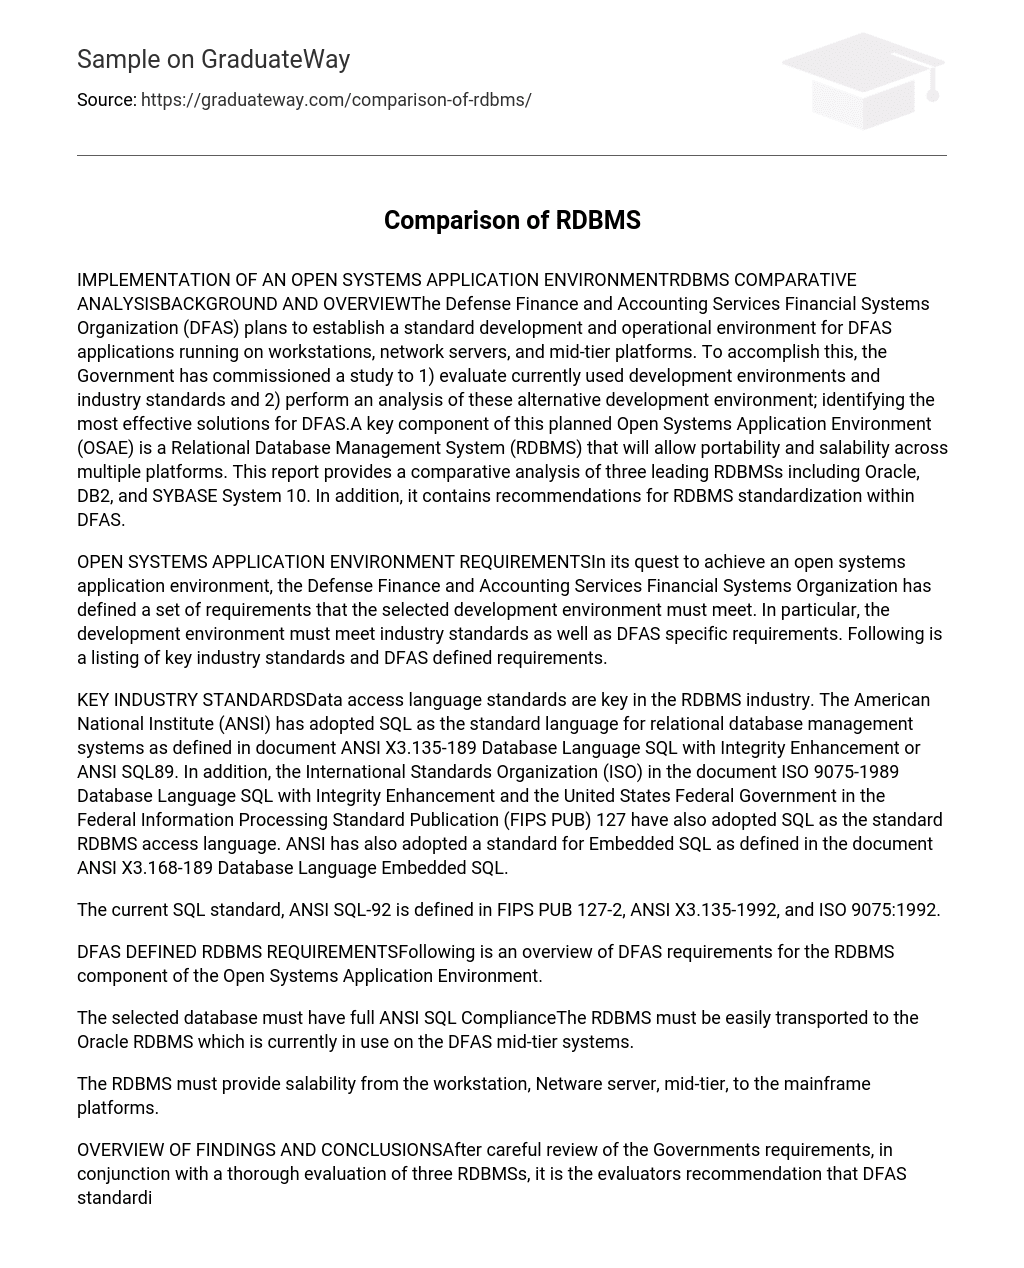 Comparison of RDBMS